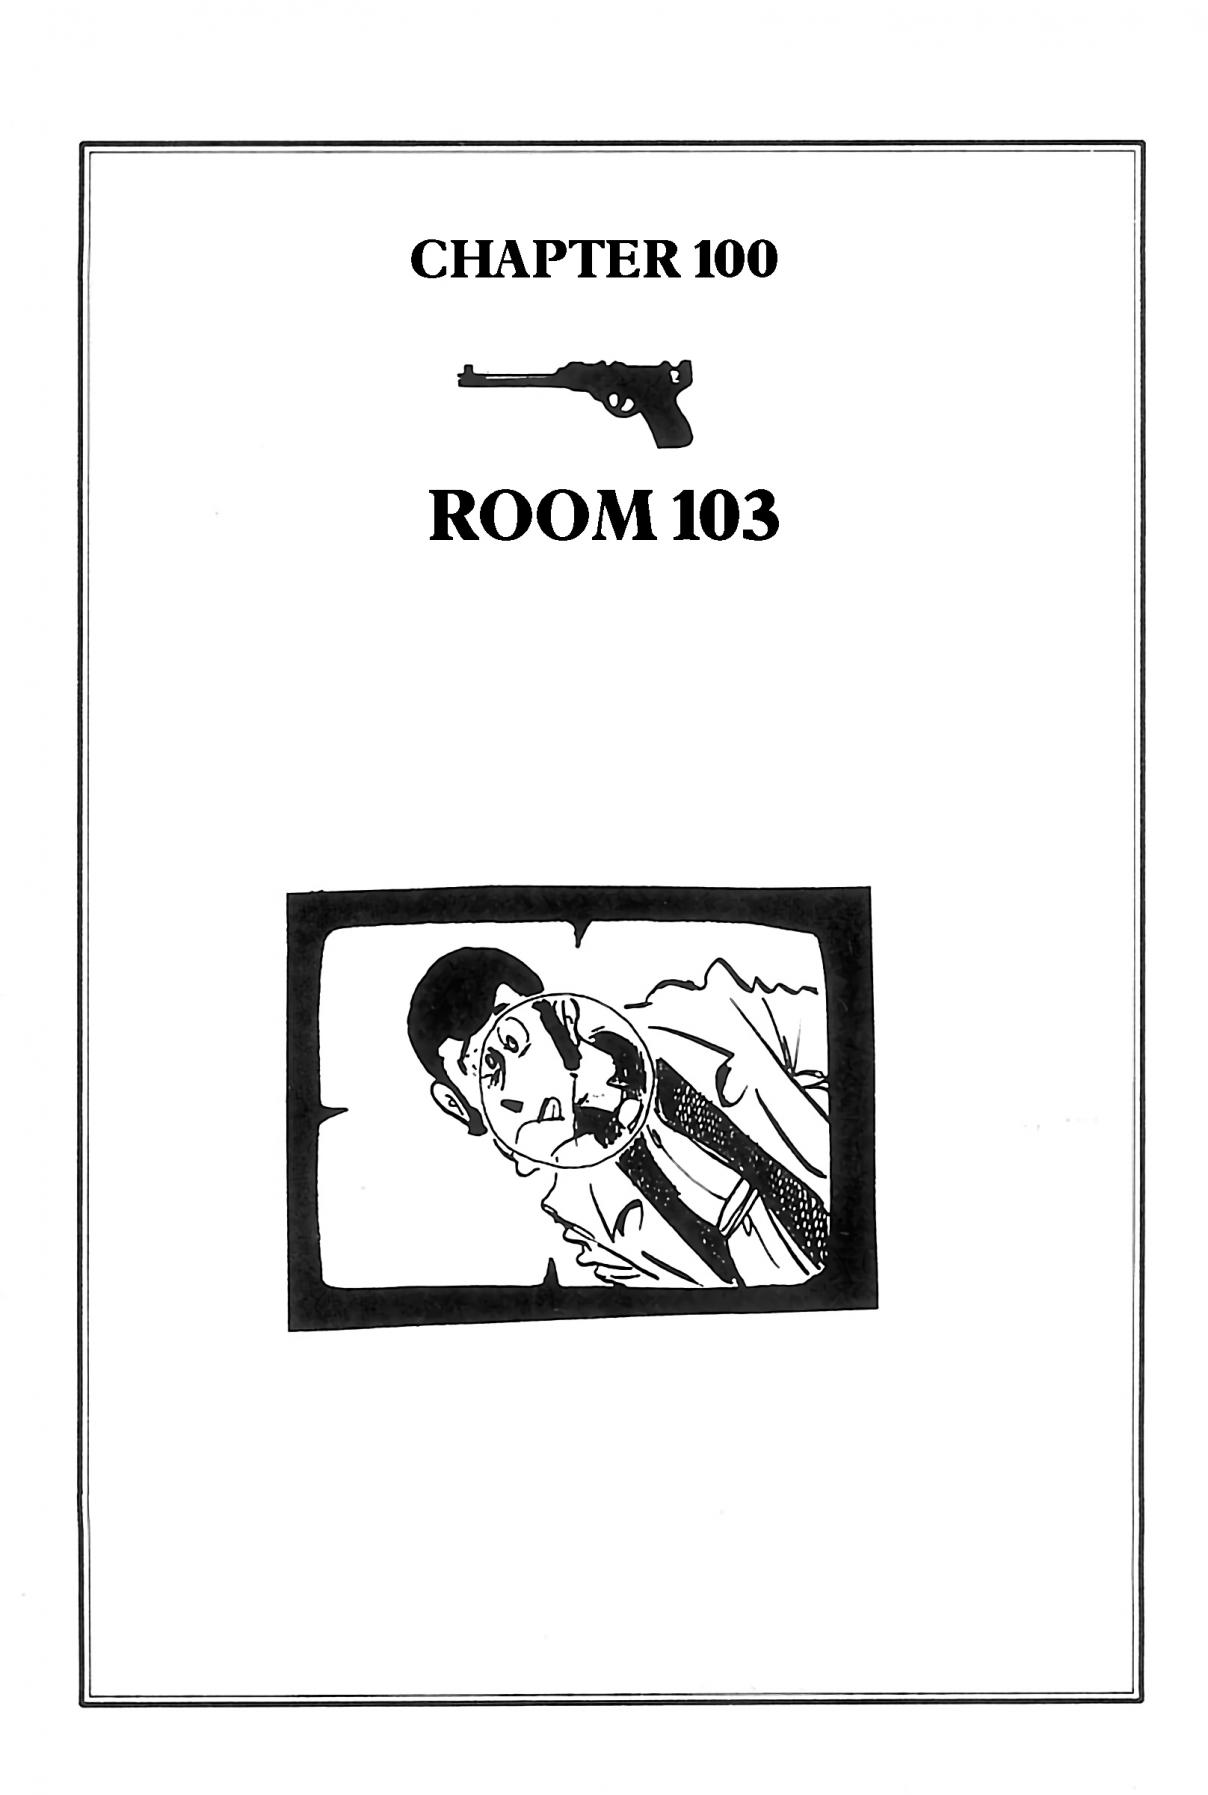 Shin Lupin III Vol. 9 Ch. 100 Room 103